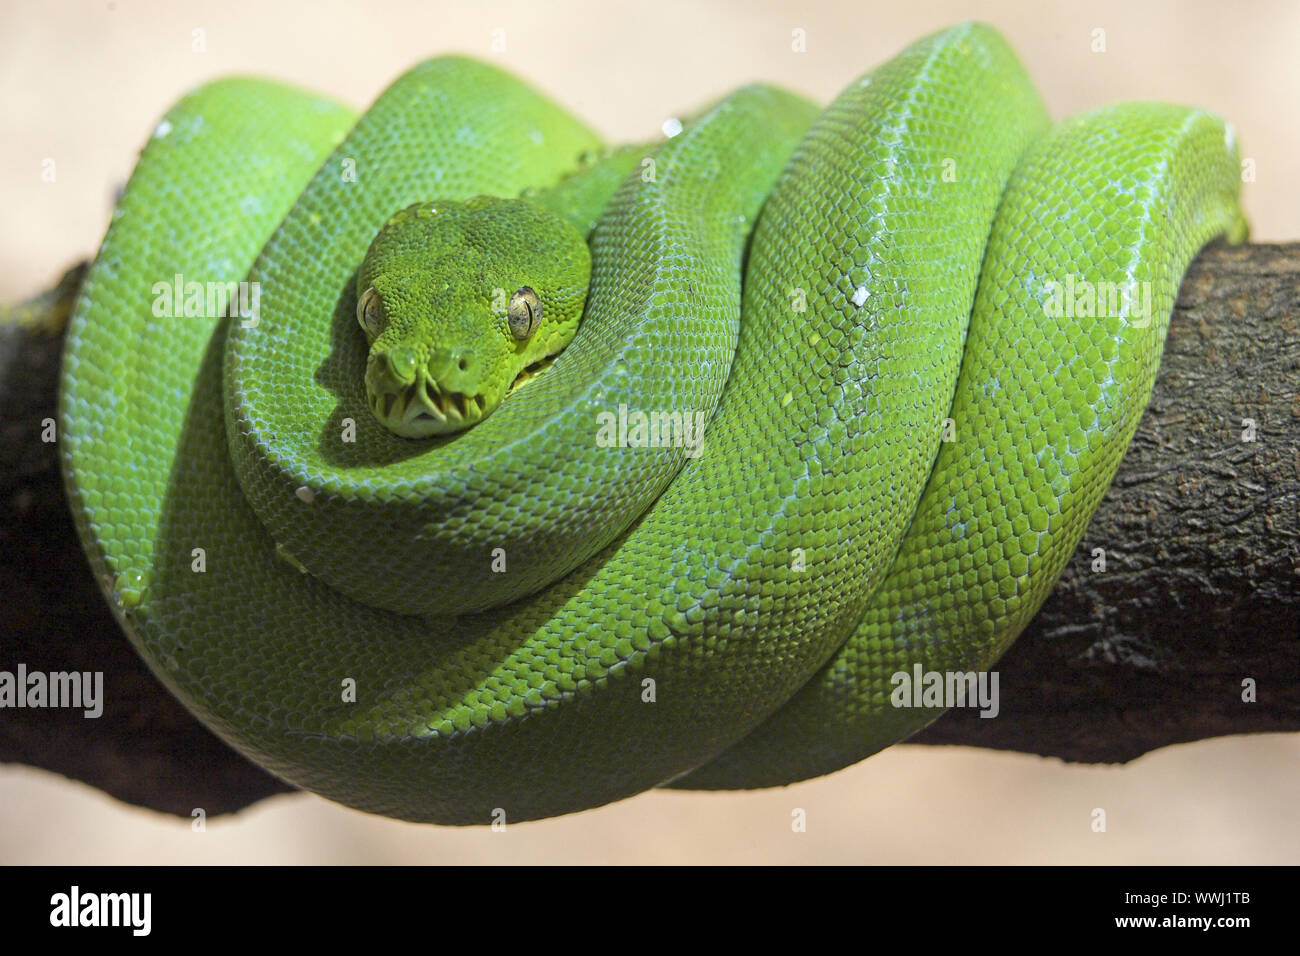 Gruener Baumpython, Morelia viridis, Chondropython viridis, Green Tree Python, captive Banque D'Images